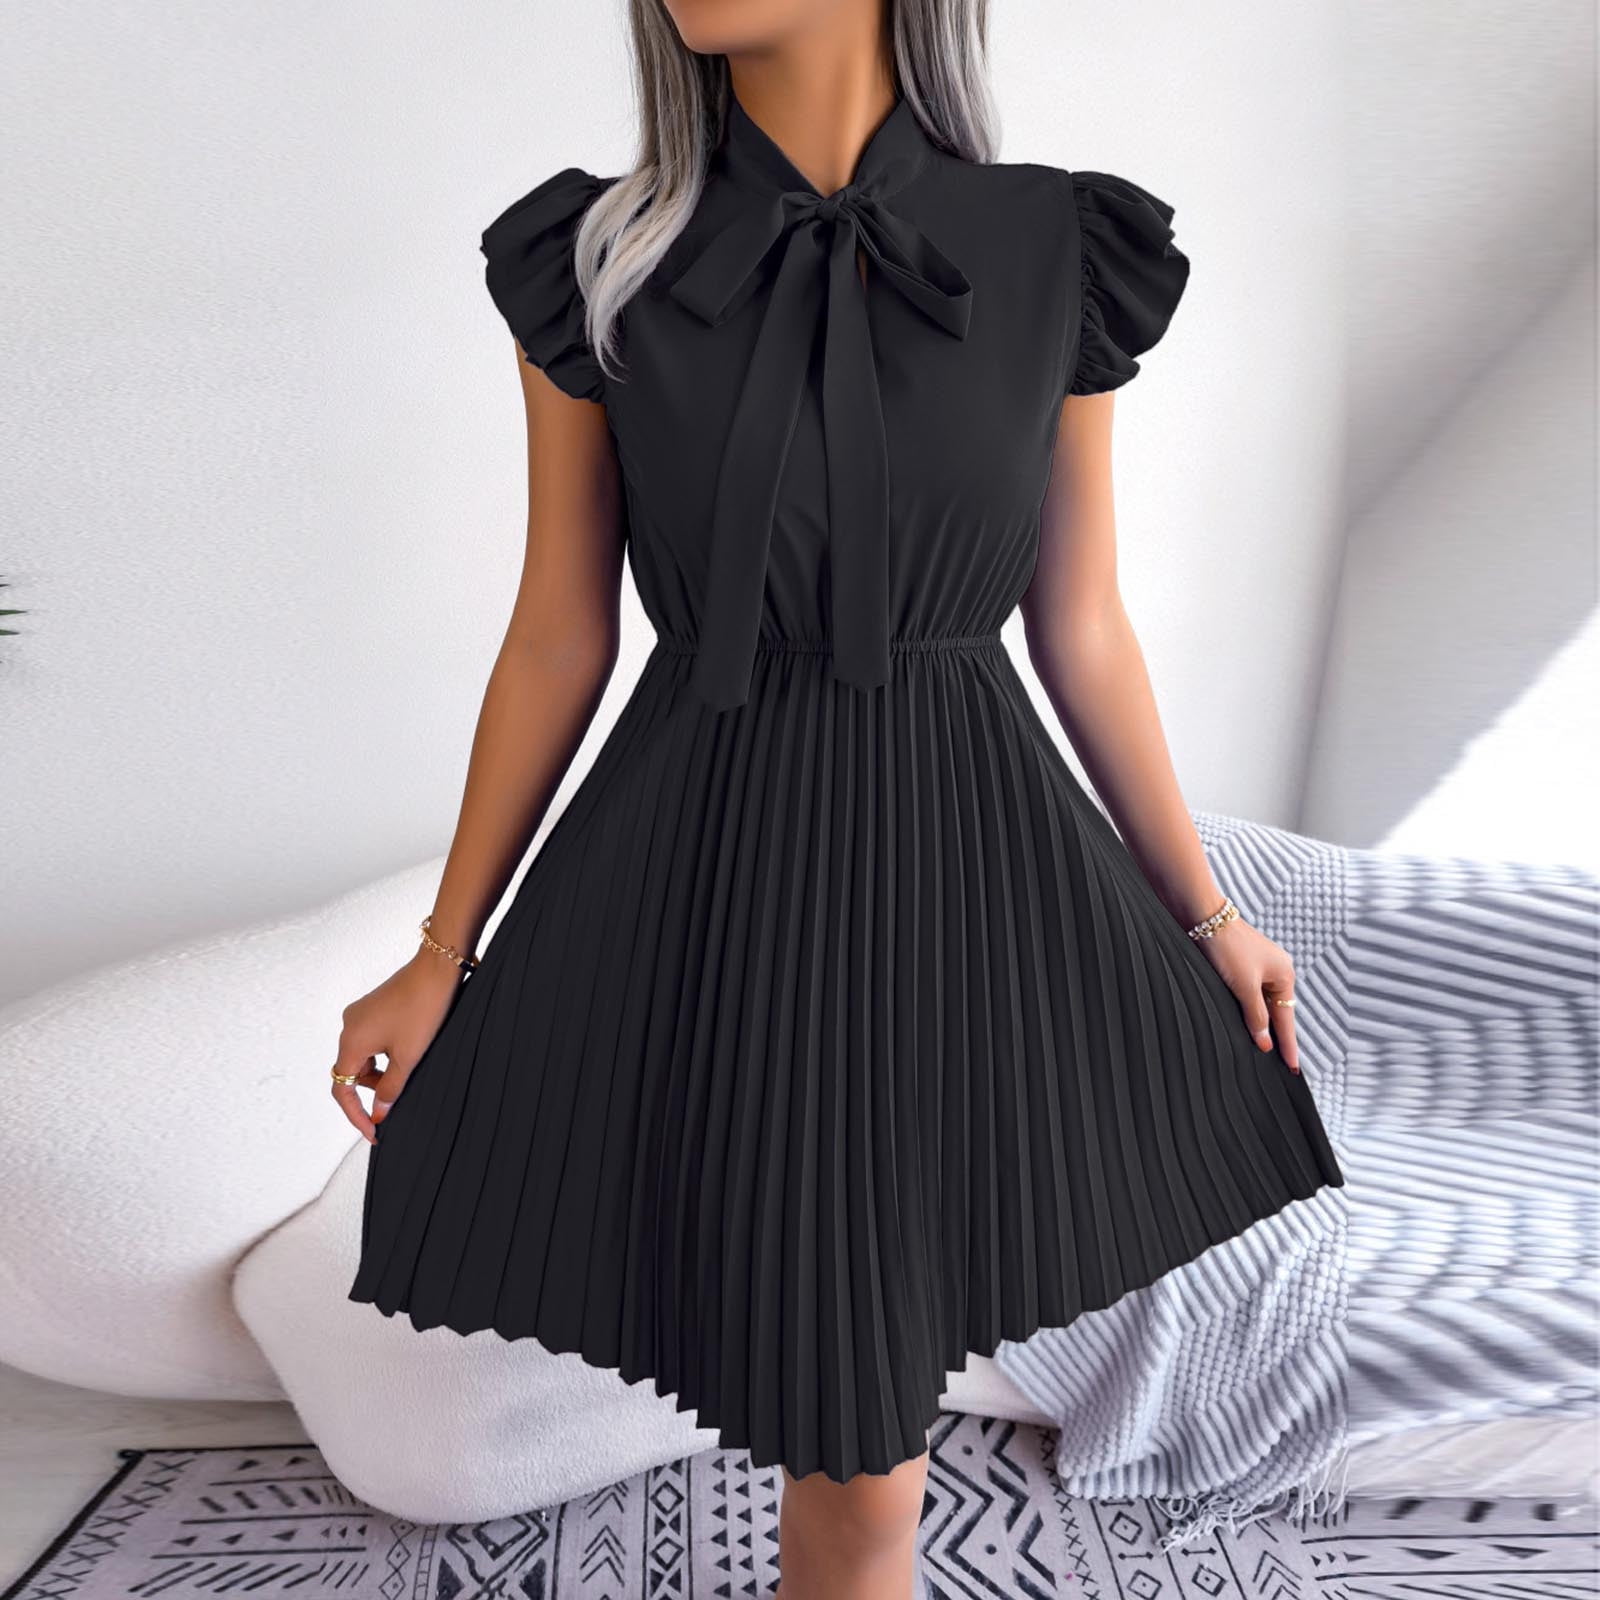 Finelylove Black Dress For Funeral Women Formal Dresses A-line Short Short  Sleeve Solid Black S - Walmart.com